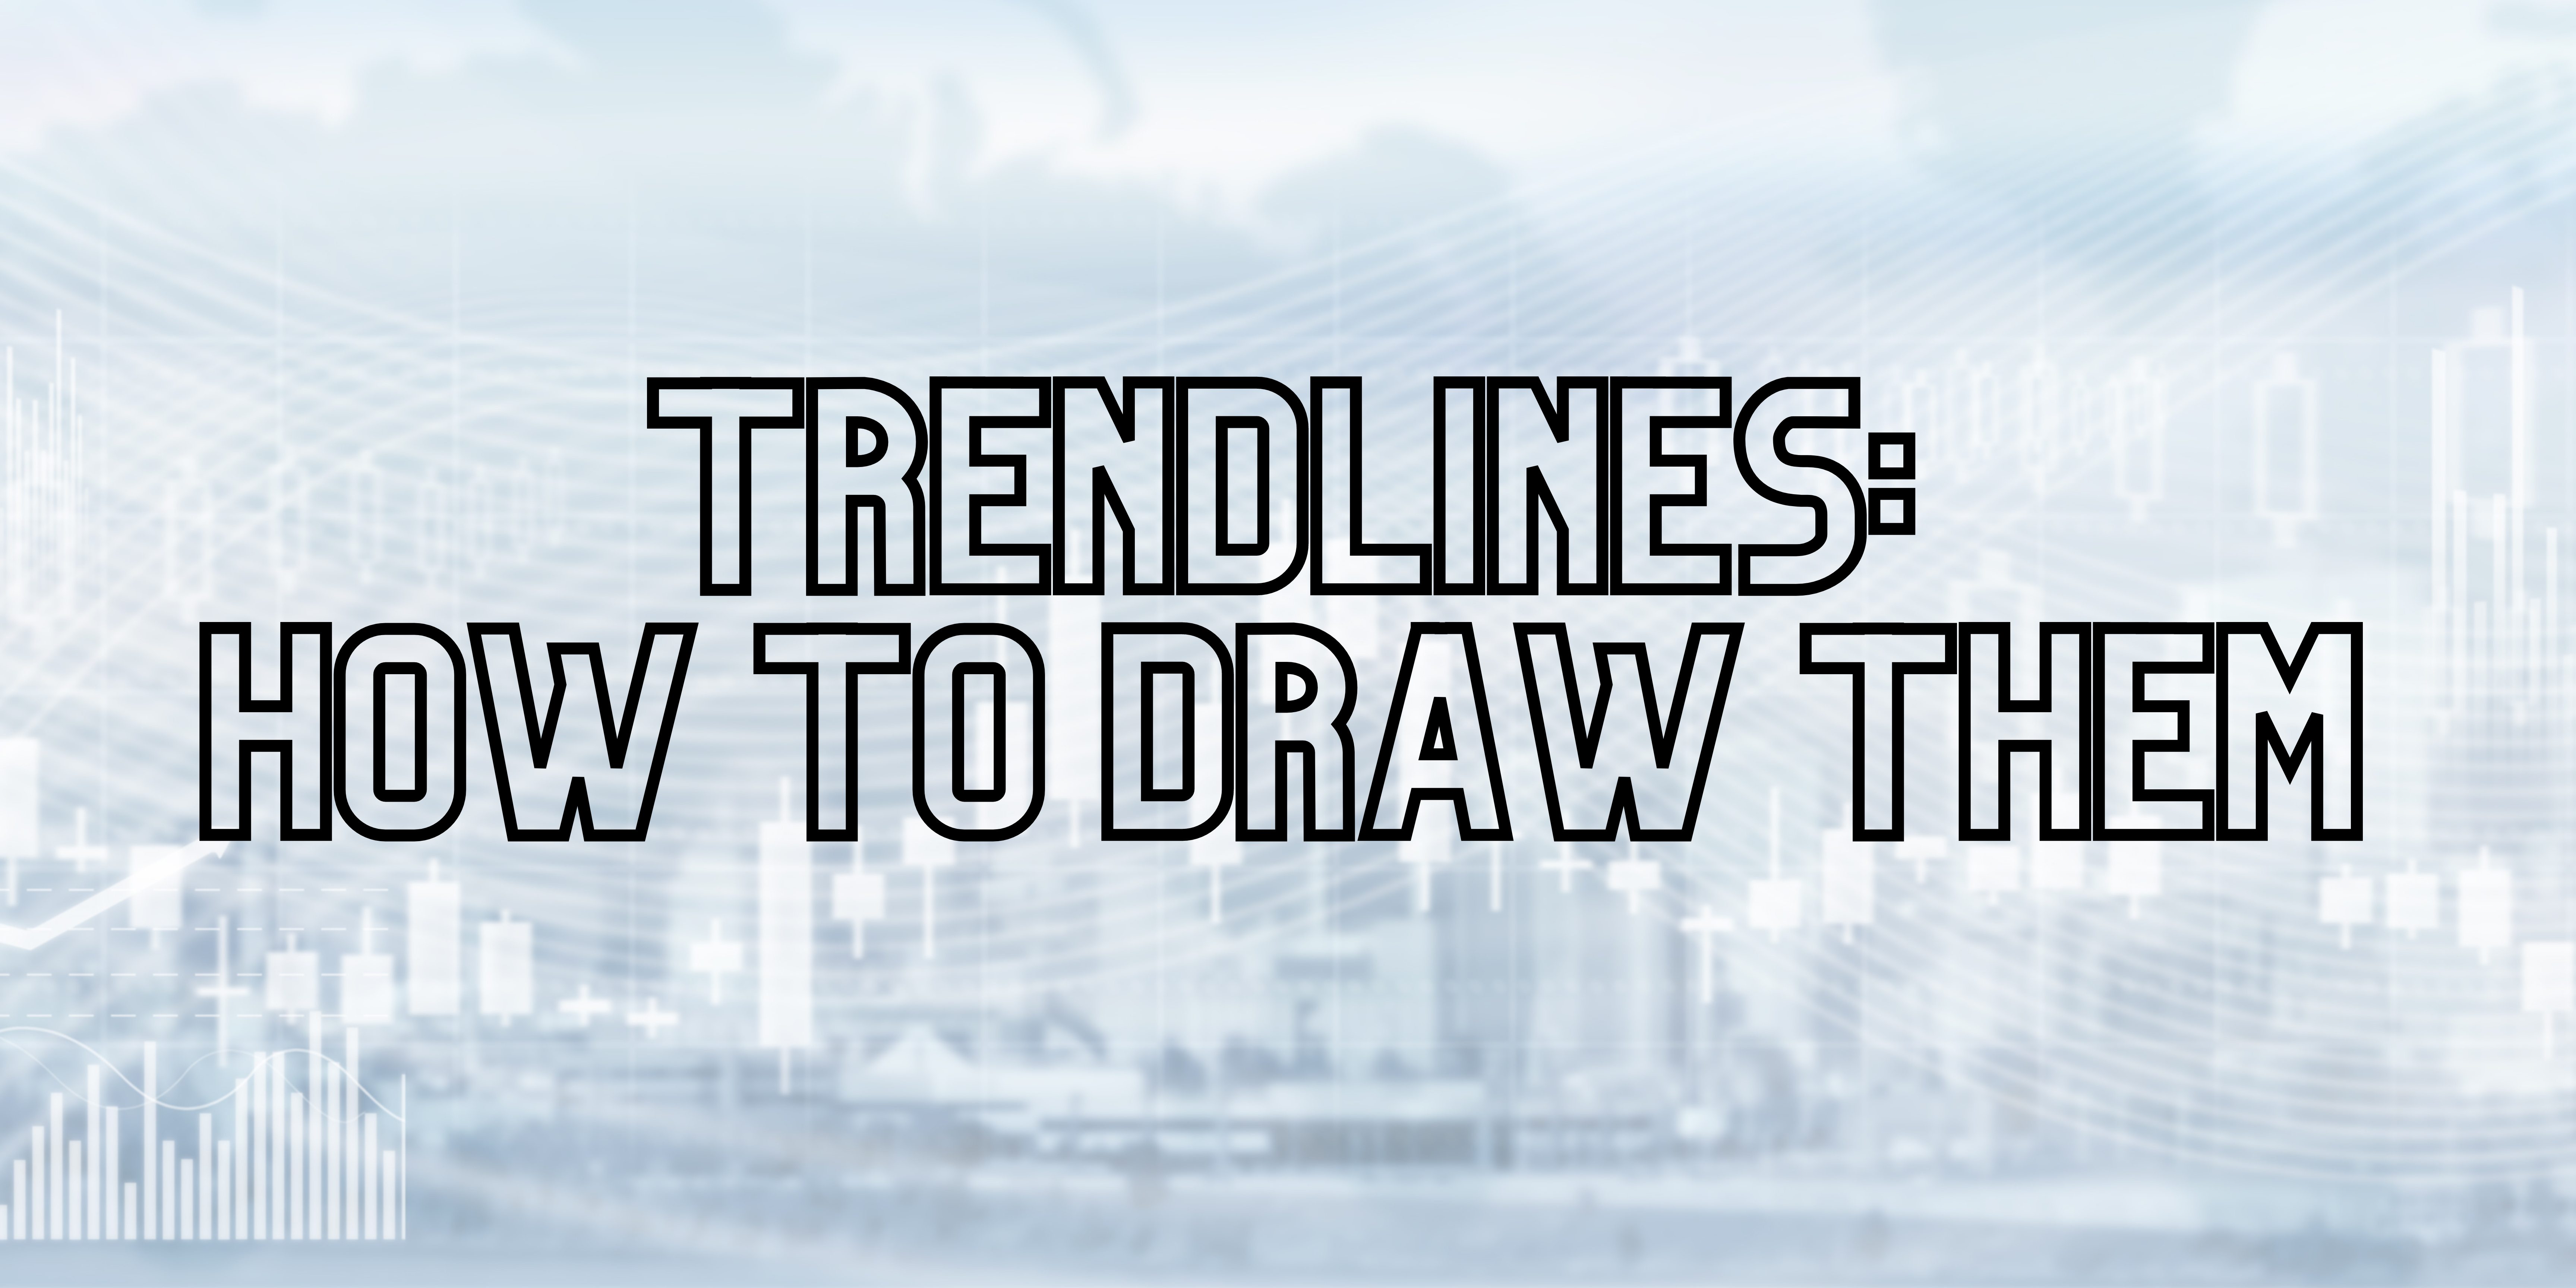 trendlines how to draw them